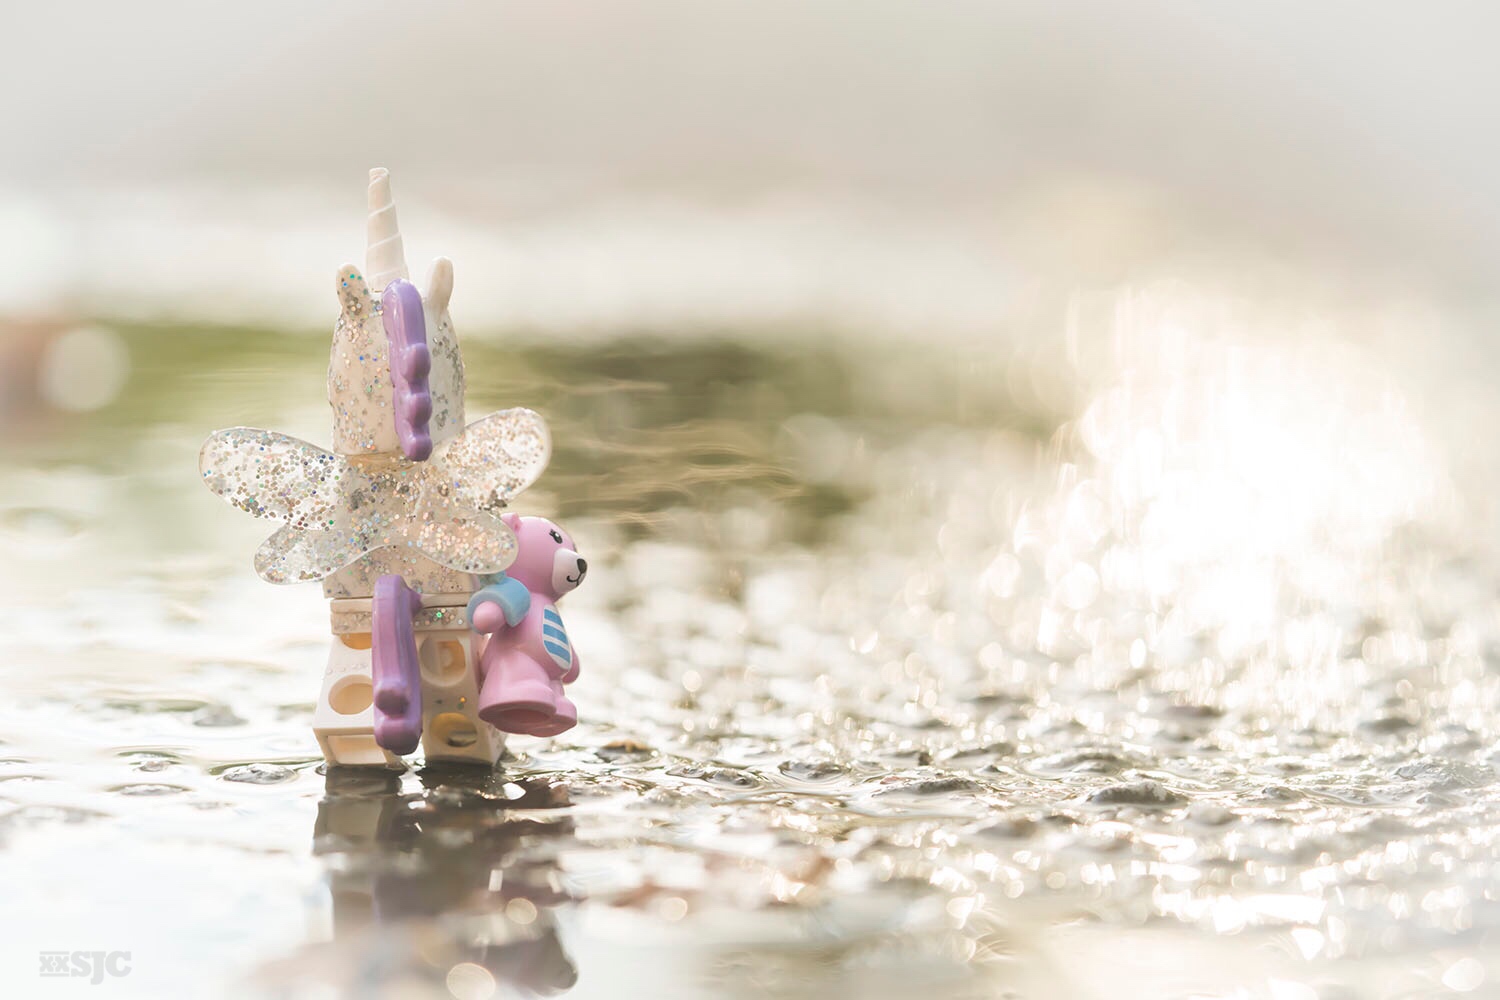 LEGO Unicorn with wings walks away holding pink LEGO teddy bear